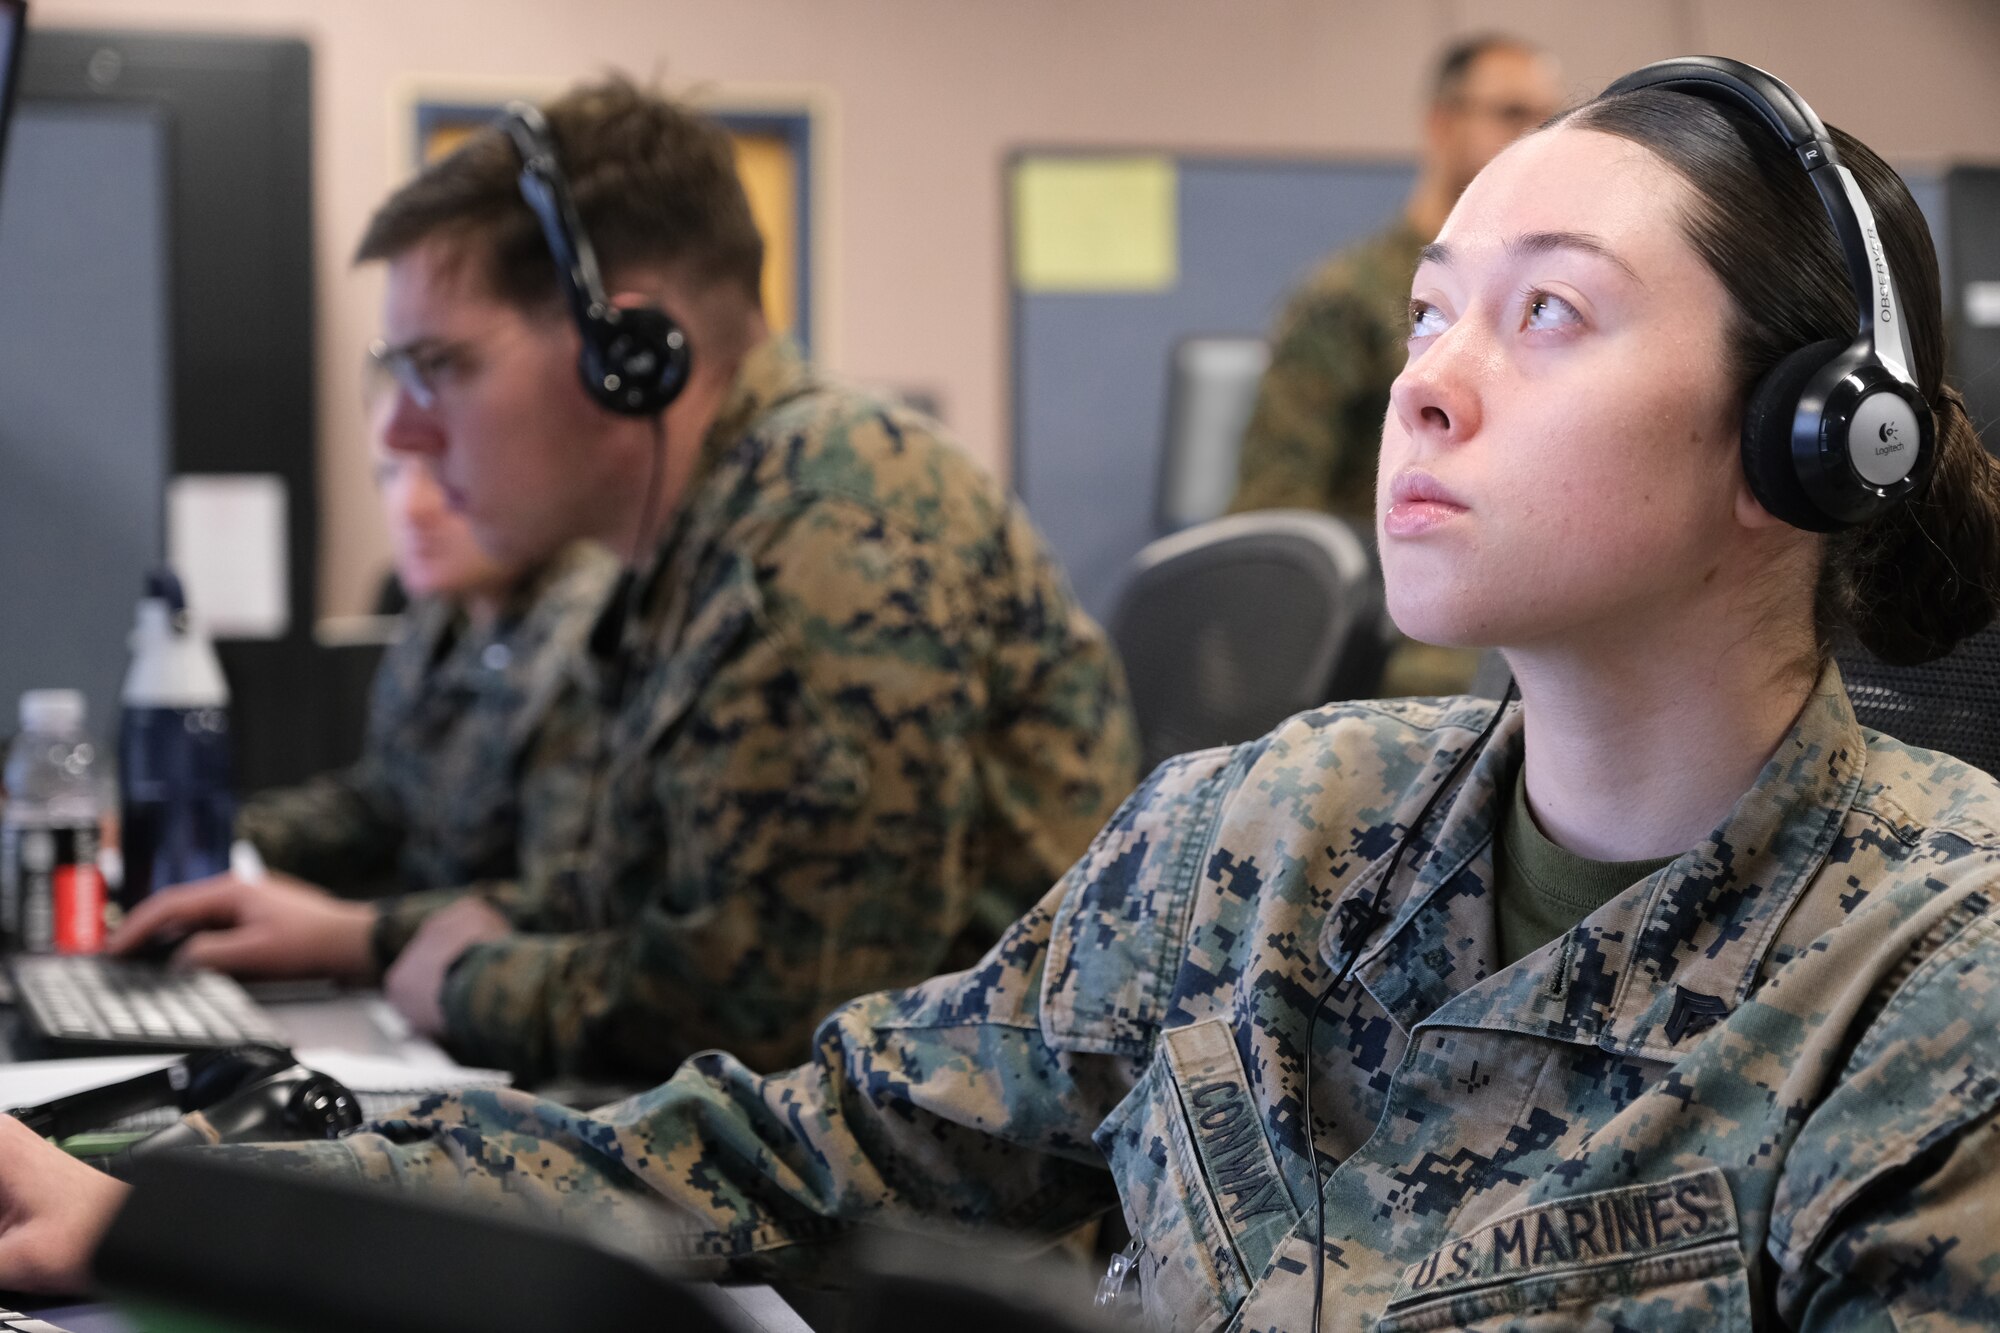 uniformed U.S. Marines work at computers